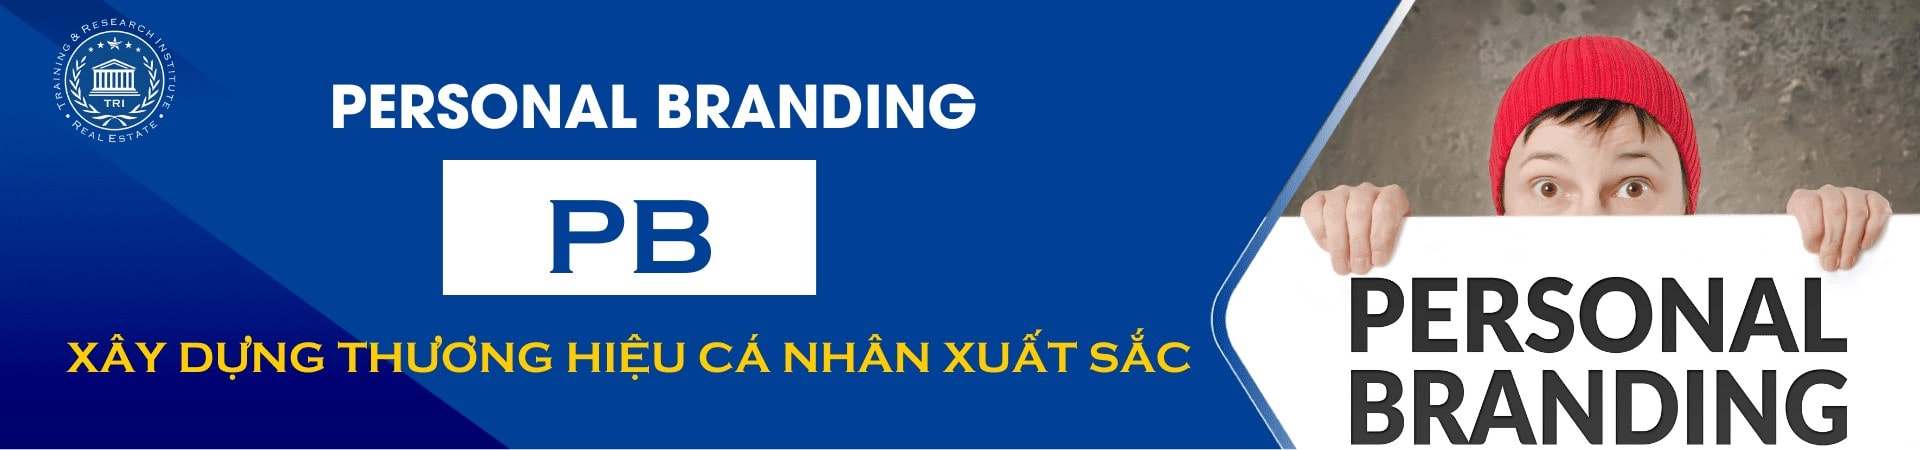 Khoa Hoc Xay Dung Thuong Hieu Ca Nhan